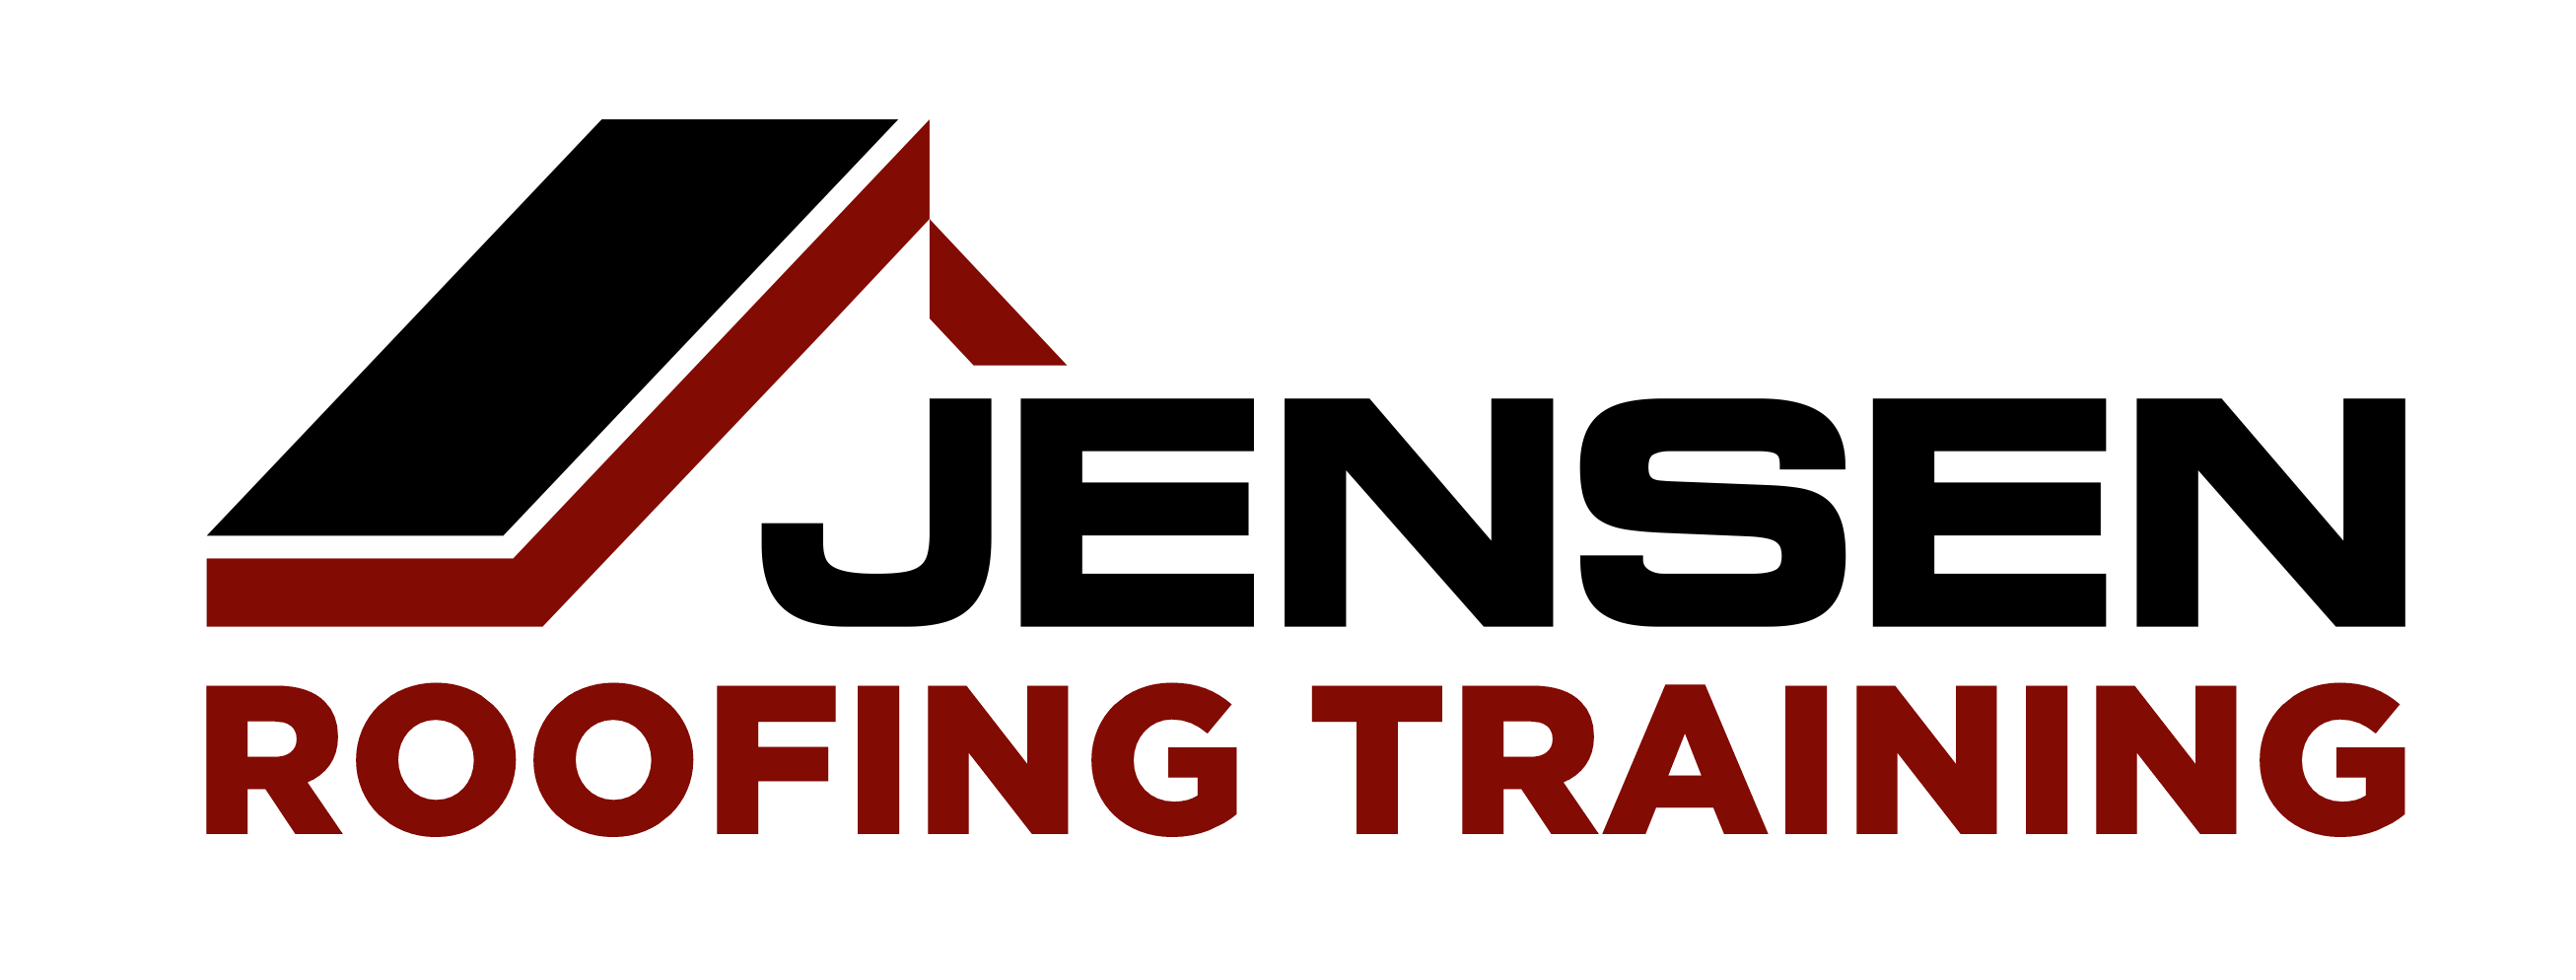 Jensen Roofing Training